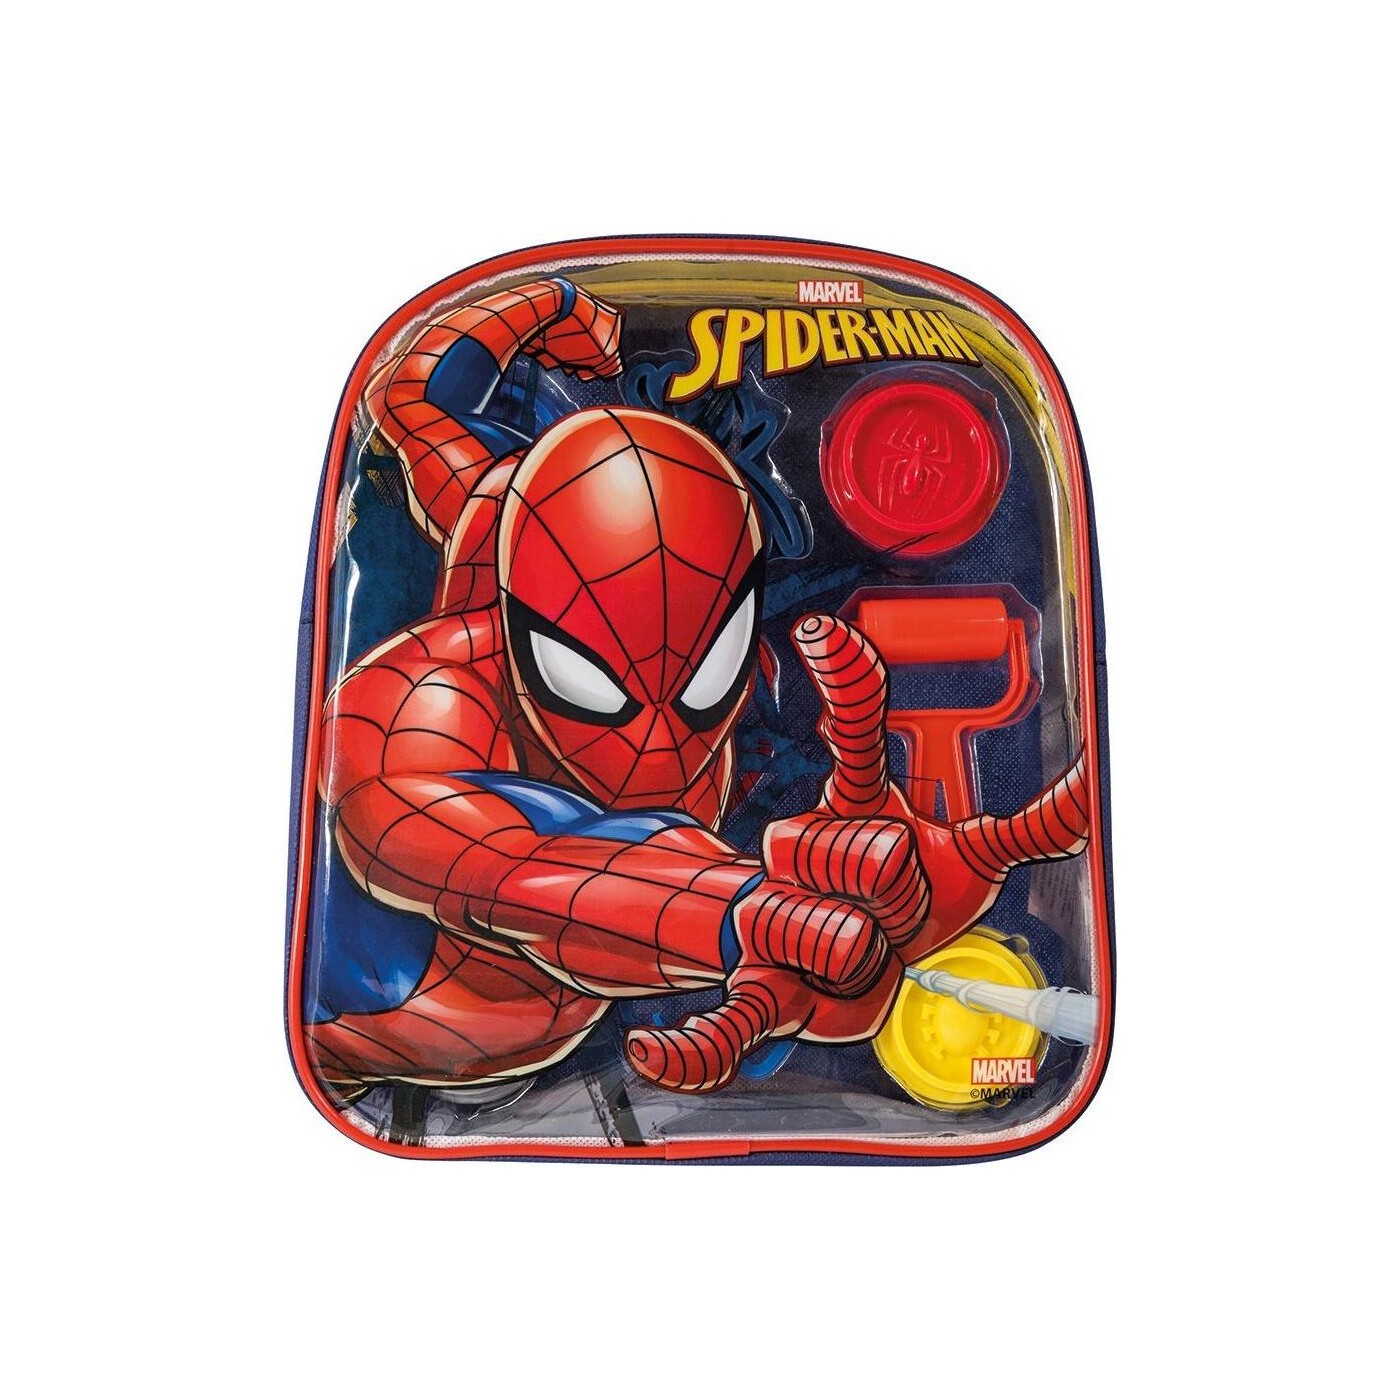 As Company Πλαστελίνη Marvel Spiderman Τσάντα Πλάτης Με 4 Βαζάκια - Καπάκια Καλουπάκια Και 5 Εργαλεία 200Gr (1045-03601)